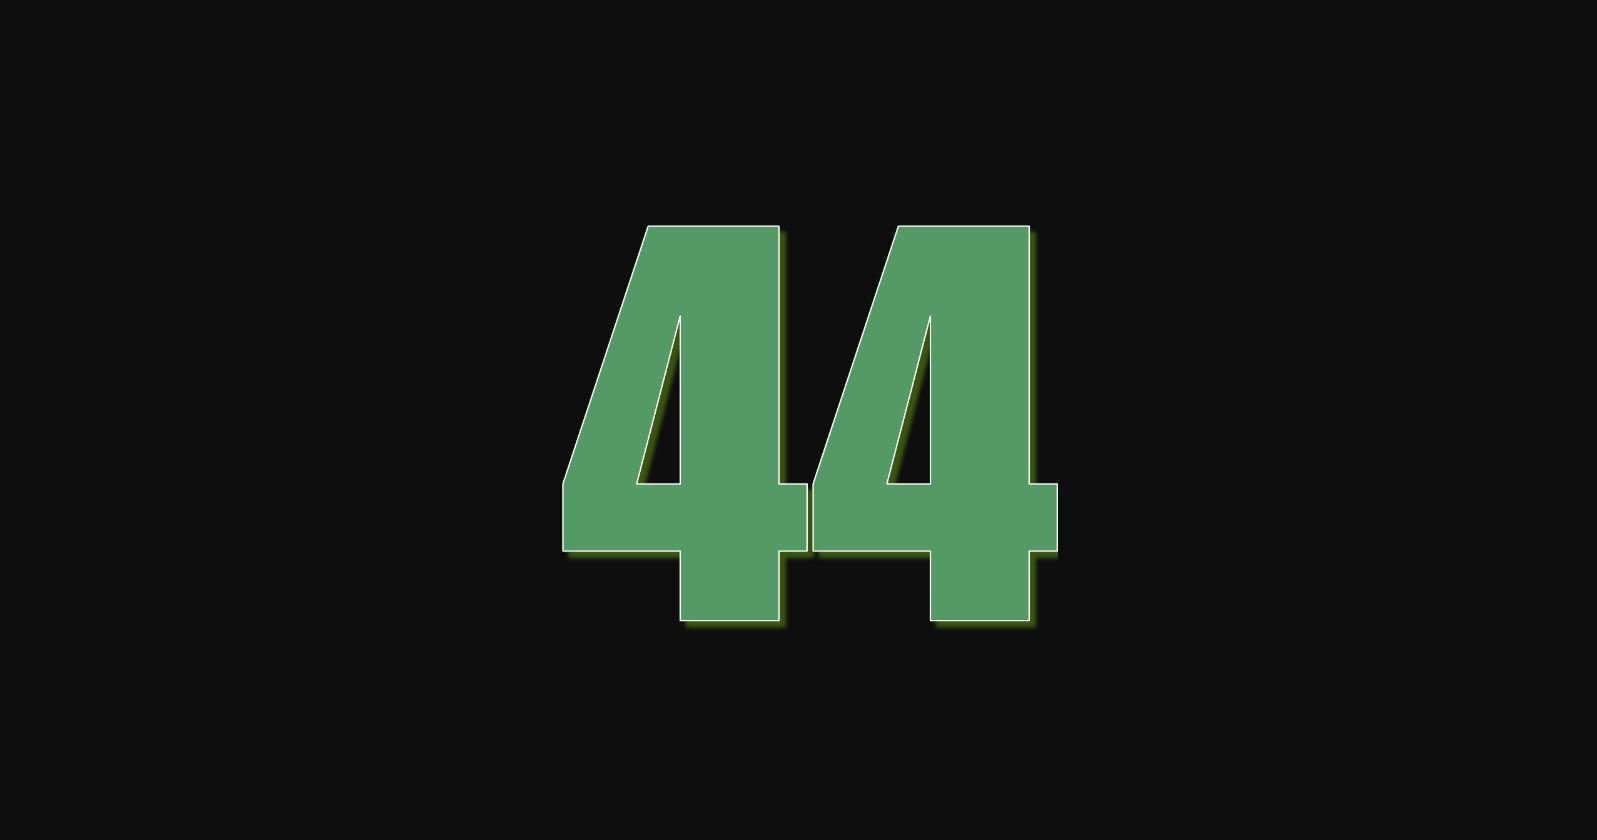 Angel Number 44 in green font color against a black background